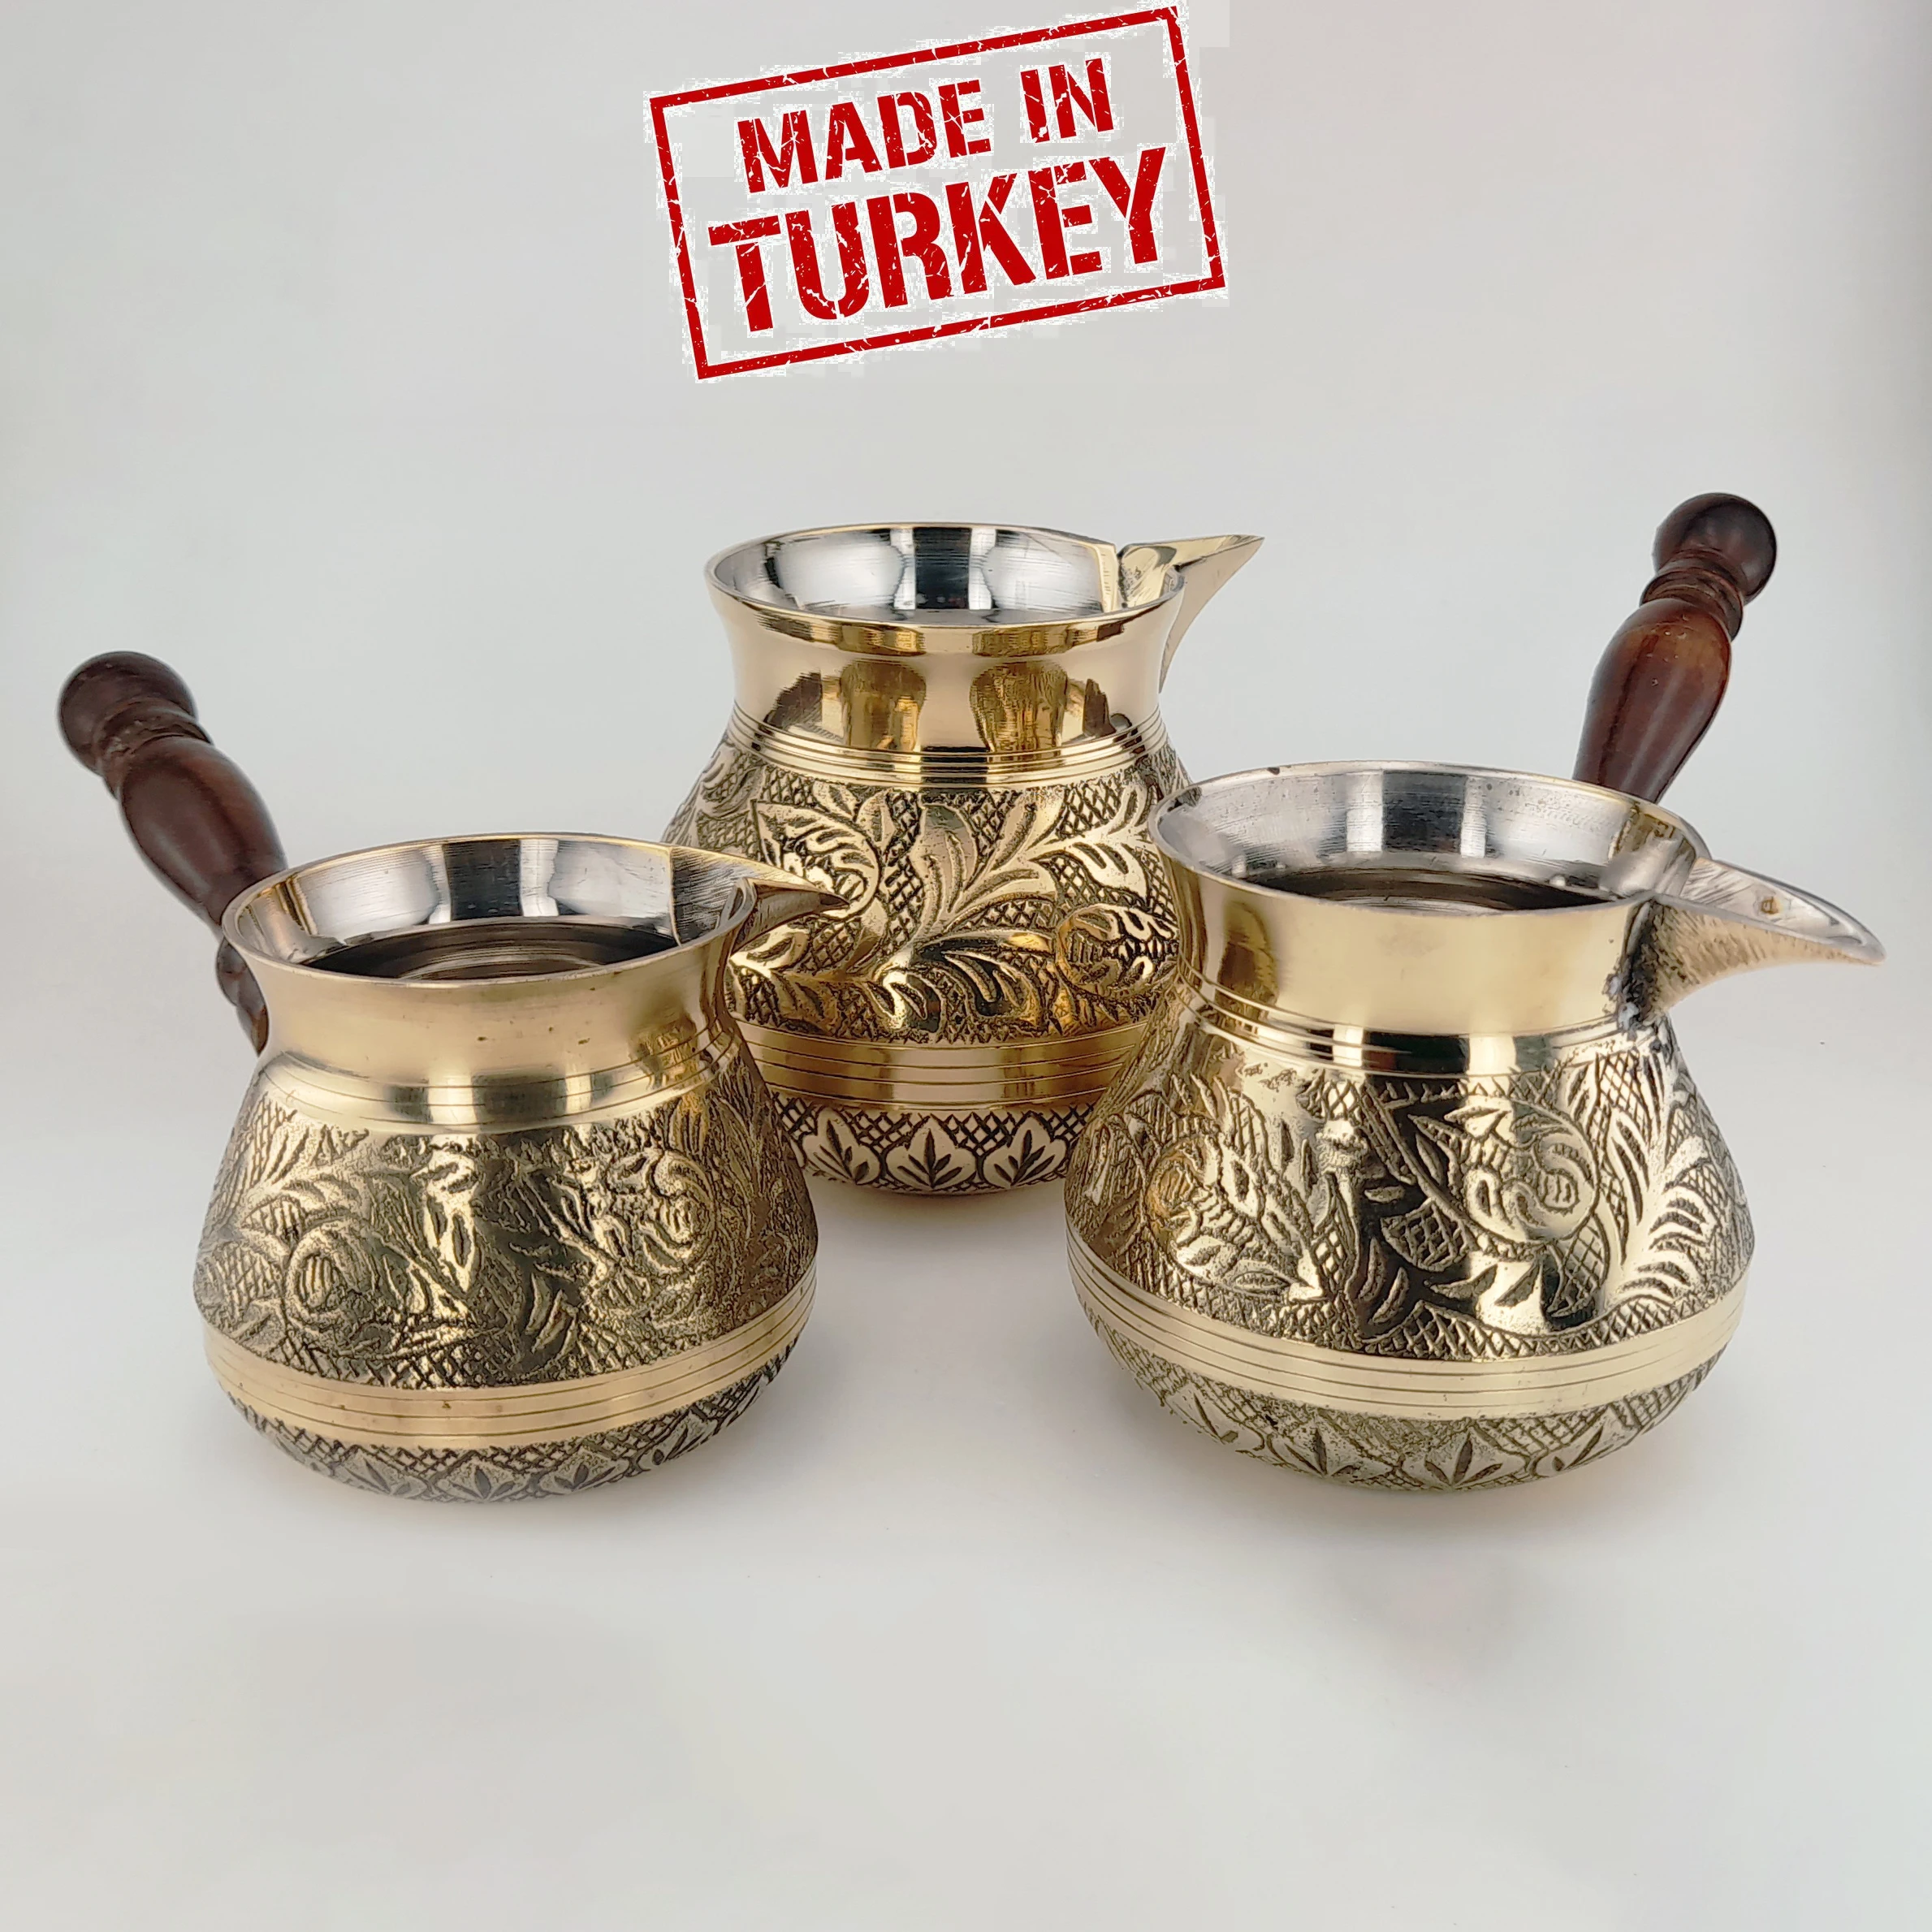 Anatolian Coffe Mug Espresso Pot Cezve King Set Turkish Greek Ottoman Design Kitchen Gift Decoration 3 Pieces Set Kitchen Winter